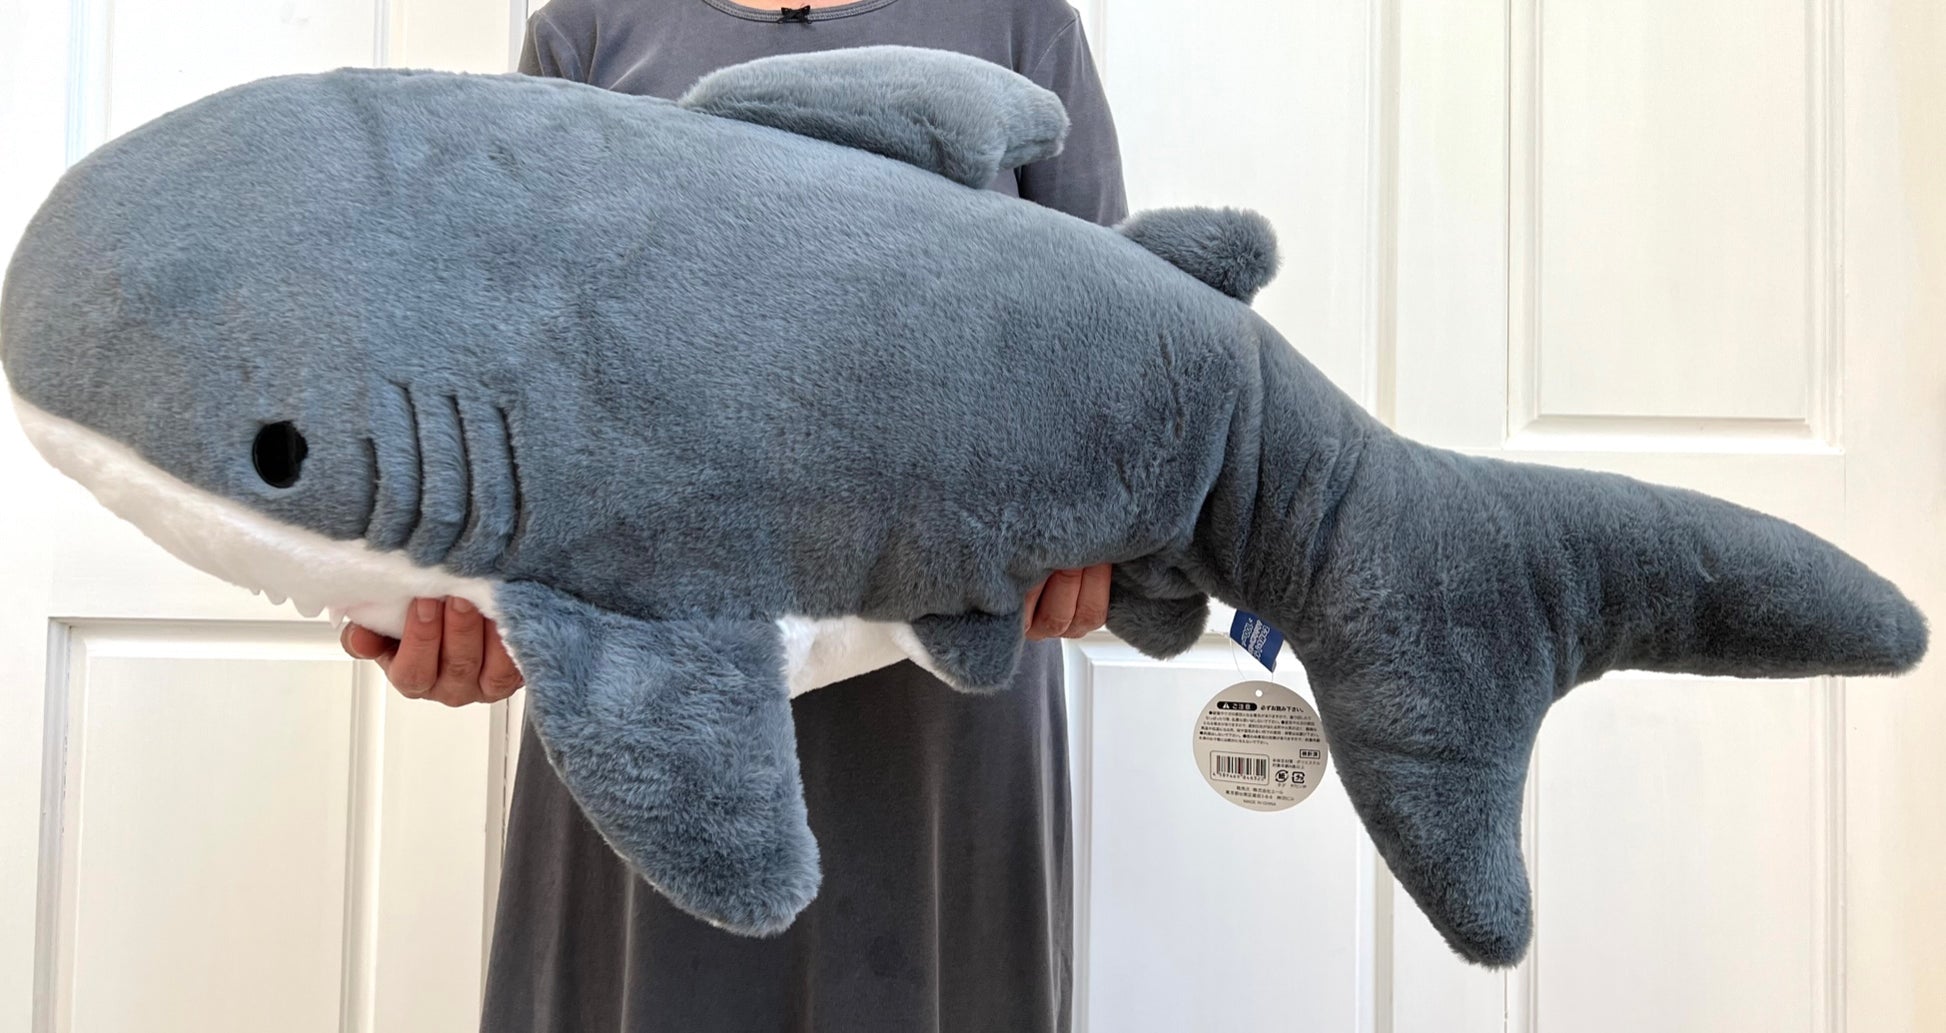 Original Stuffed Chumbuddy Super Size Shark Sleeping Bag, 40% OFF